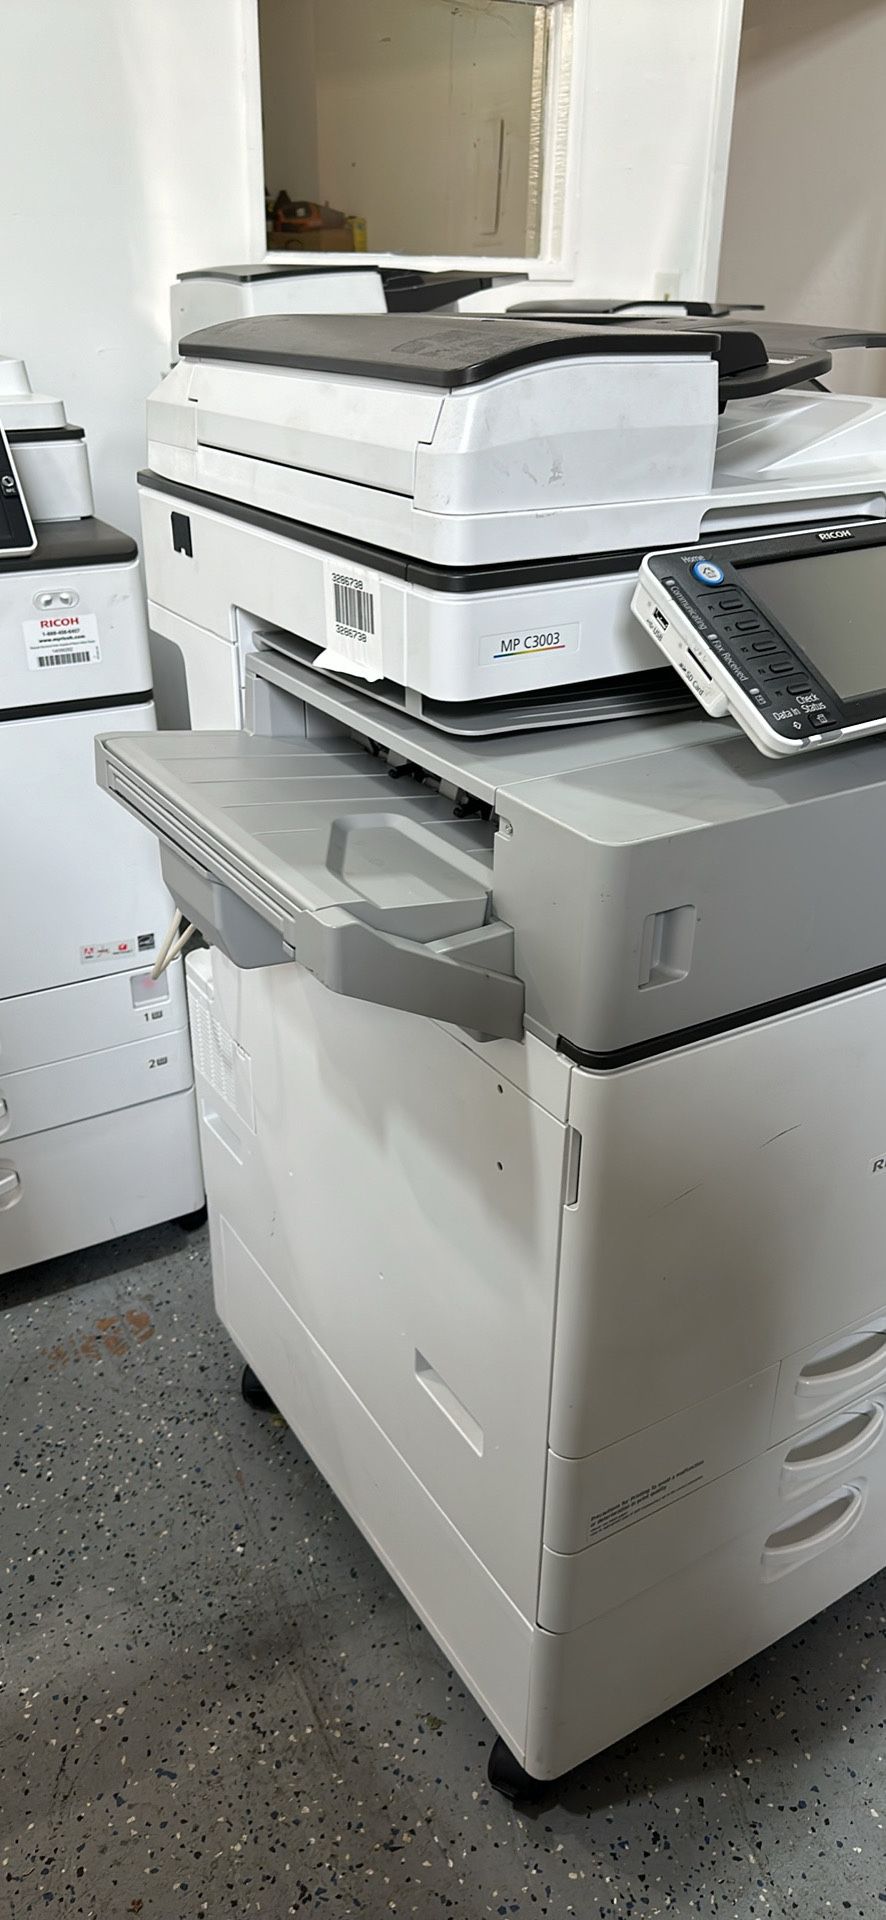 Printer Ricoh Mp C3003